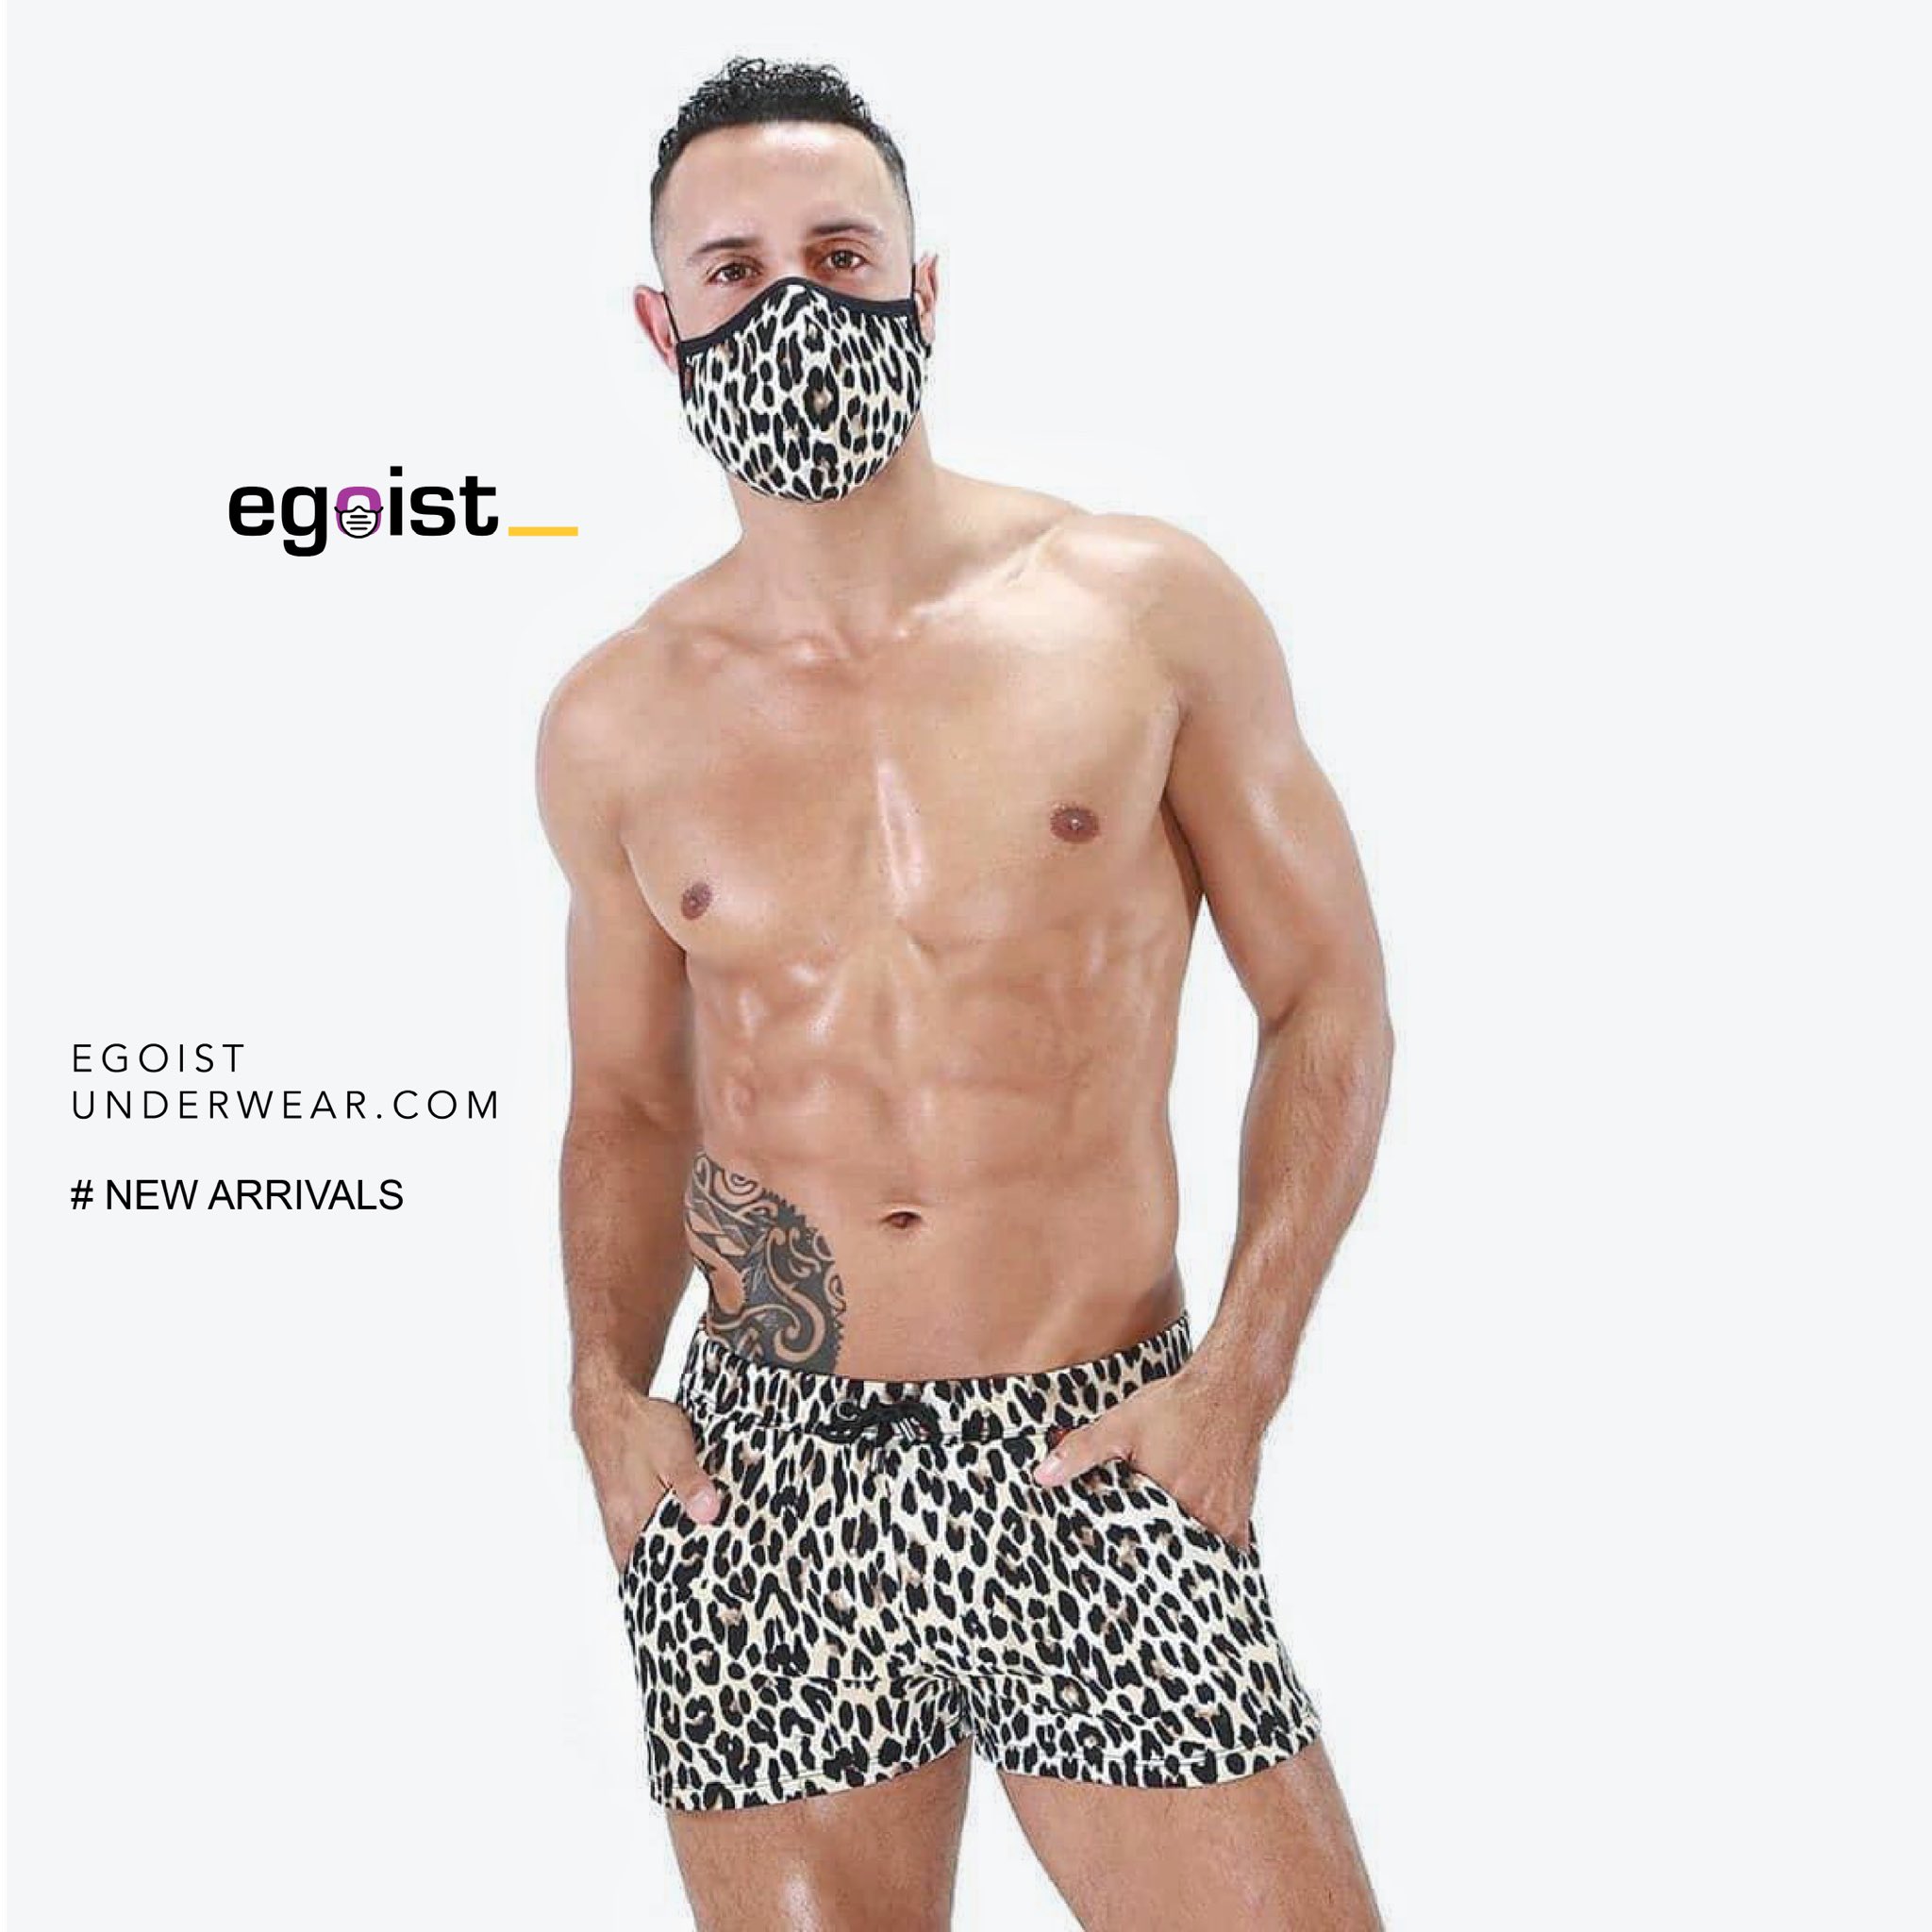 Egoist Underwear on X: B E A S T 🐆 M O D E  TOF  Paris: NEW ARRIVALS + RESTOCKED #chicago #northalsted #gymwear #gayfashion  #animalprint #animalprints #mens #mensstyle #leopardprint #newarrivals #gay  #